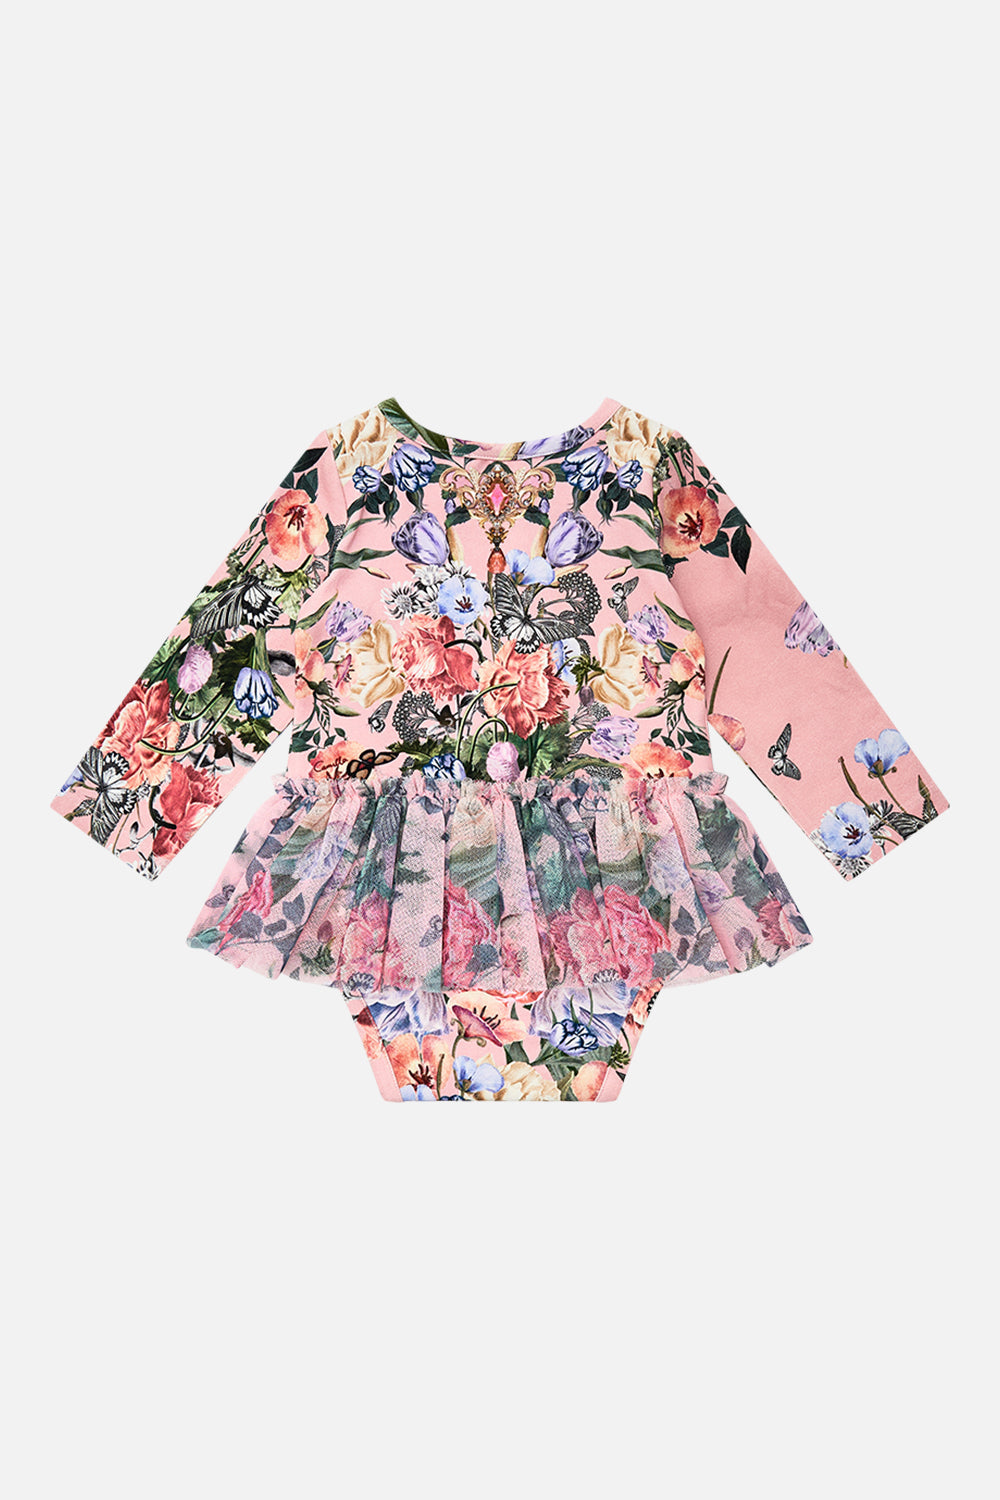 Milla by CAMILLA floral baby tutu bodysuit in Woodblock Wonder